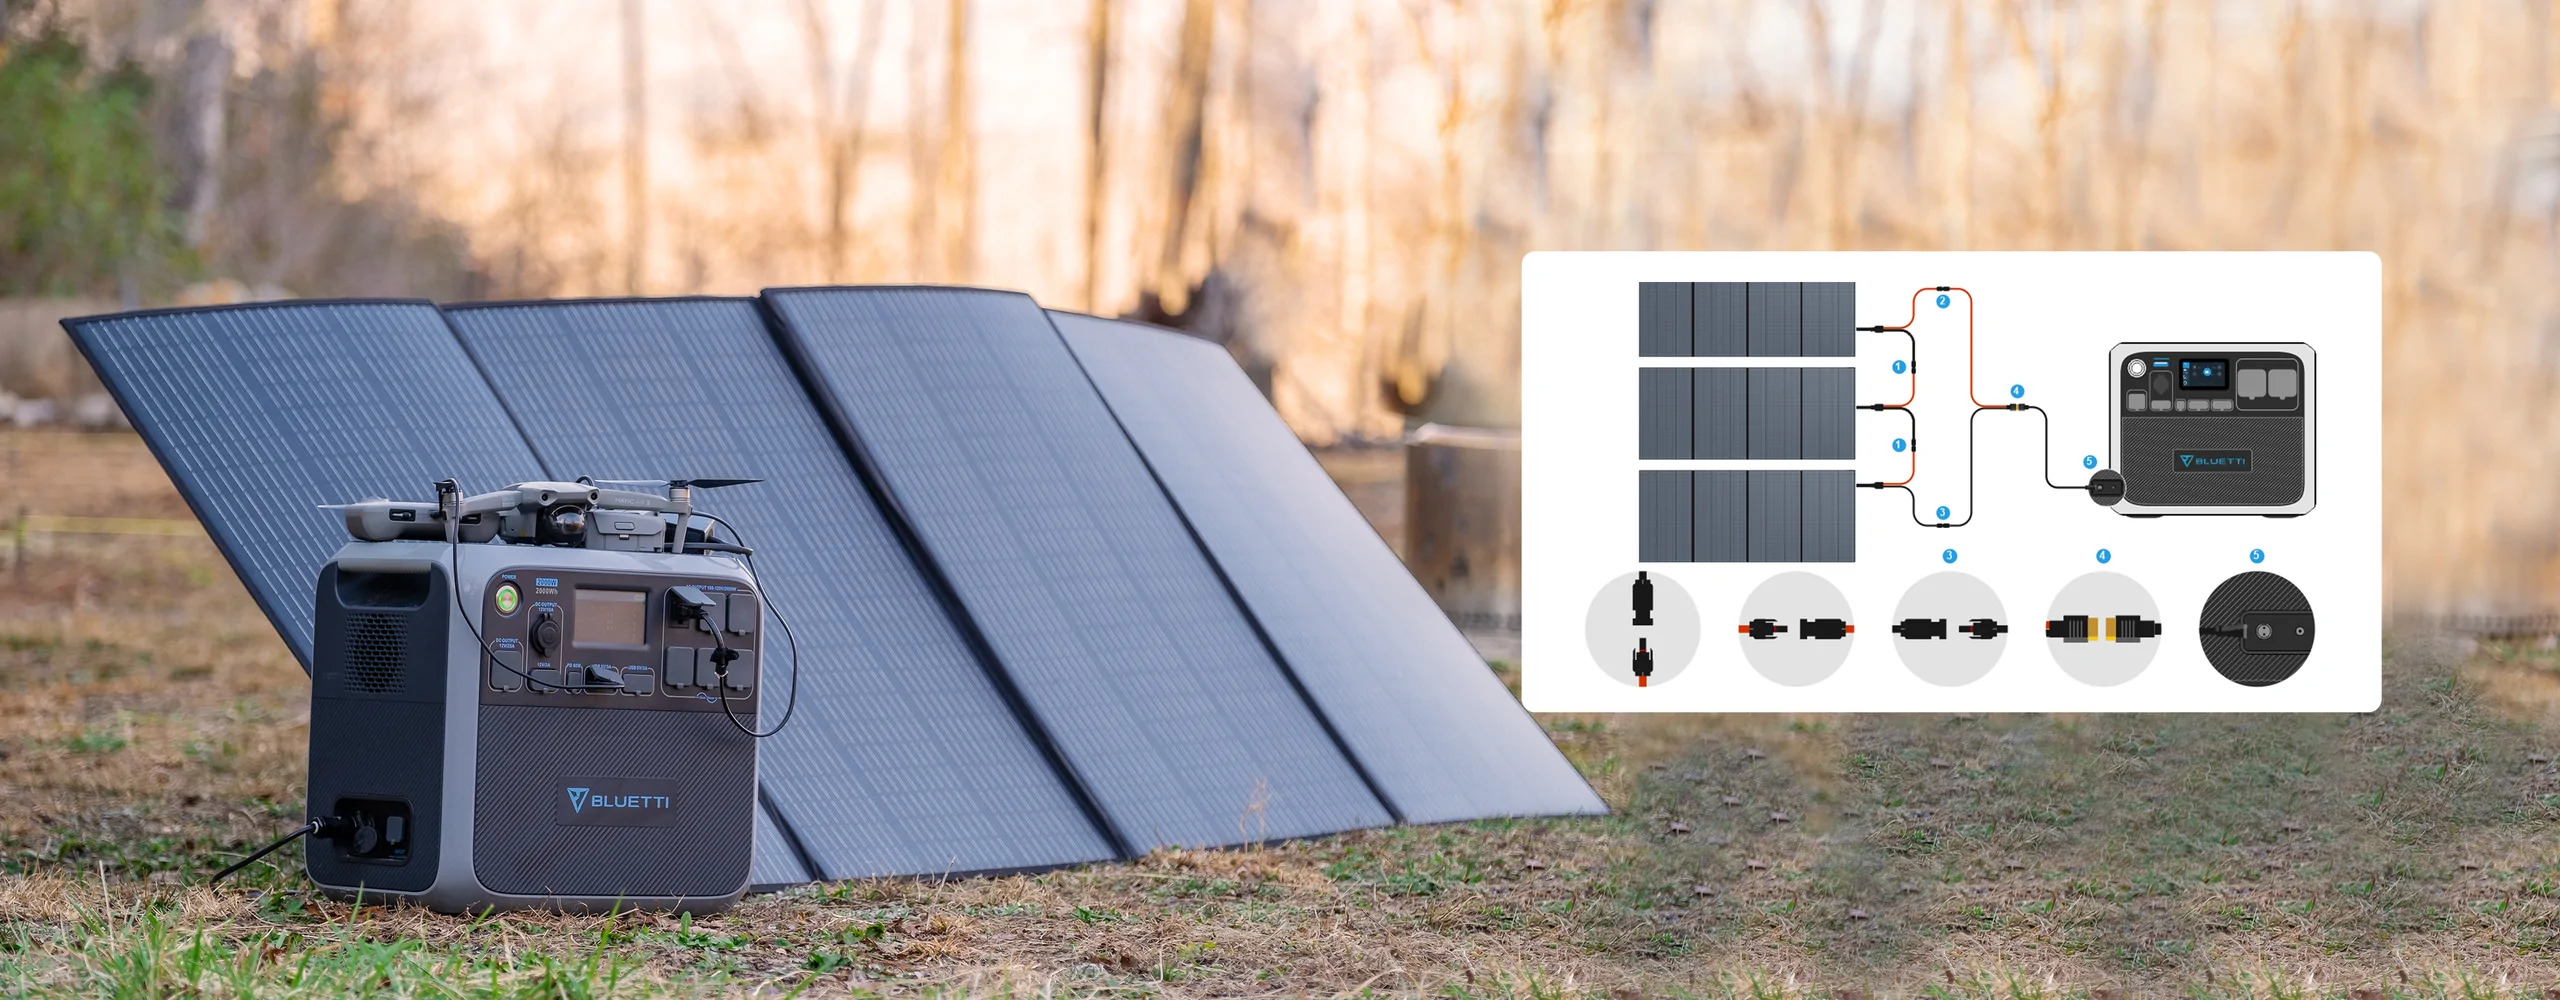 Bluetti PV350 Solar Panel Foldable and Portable Raleigh Durham North Carolina Douglas Hartley.com